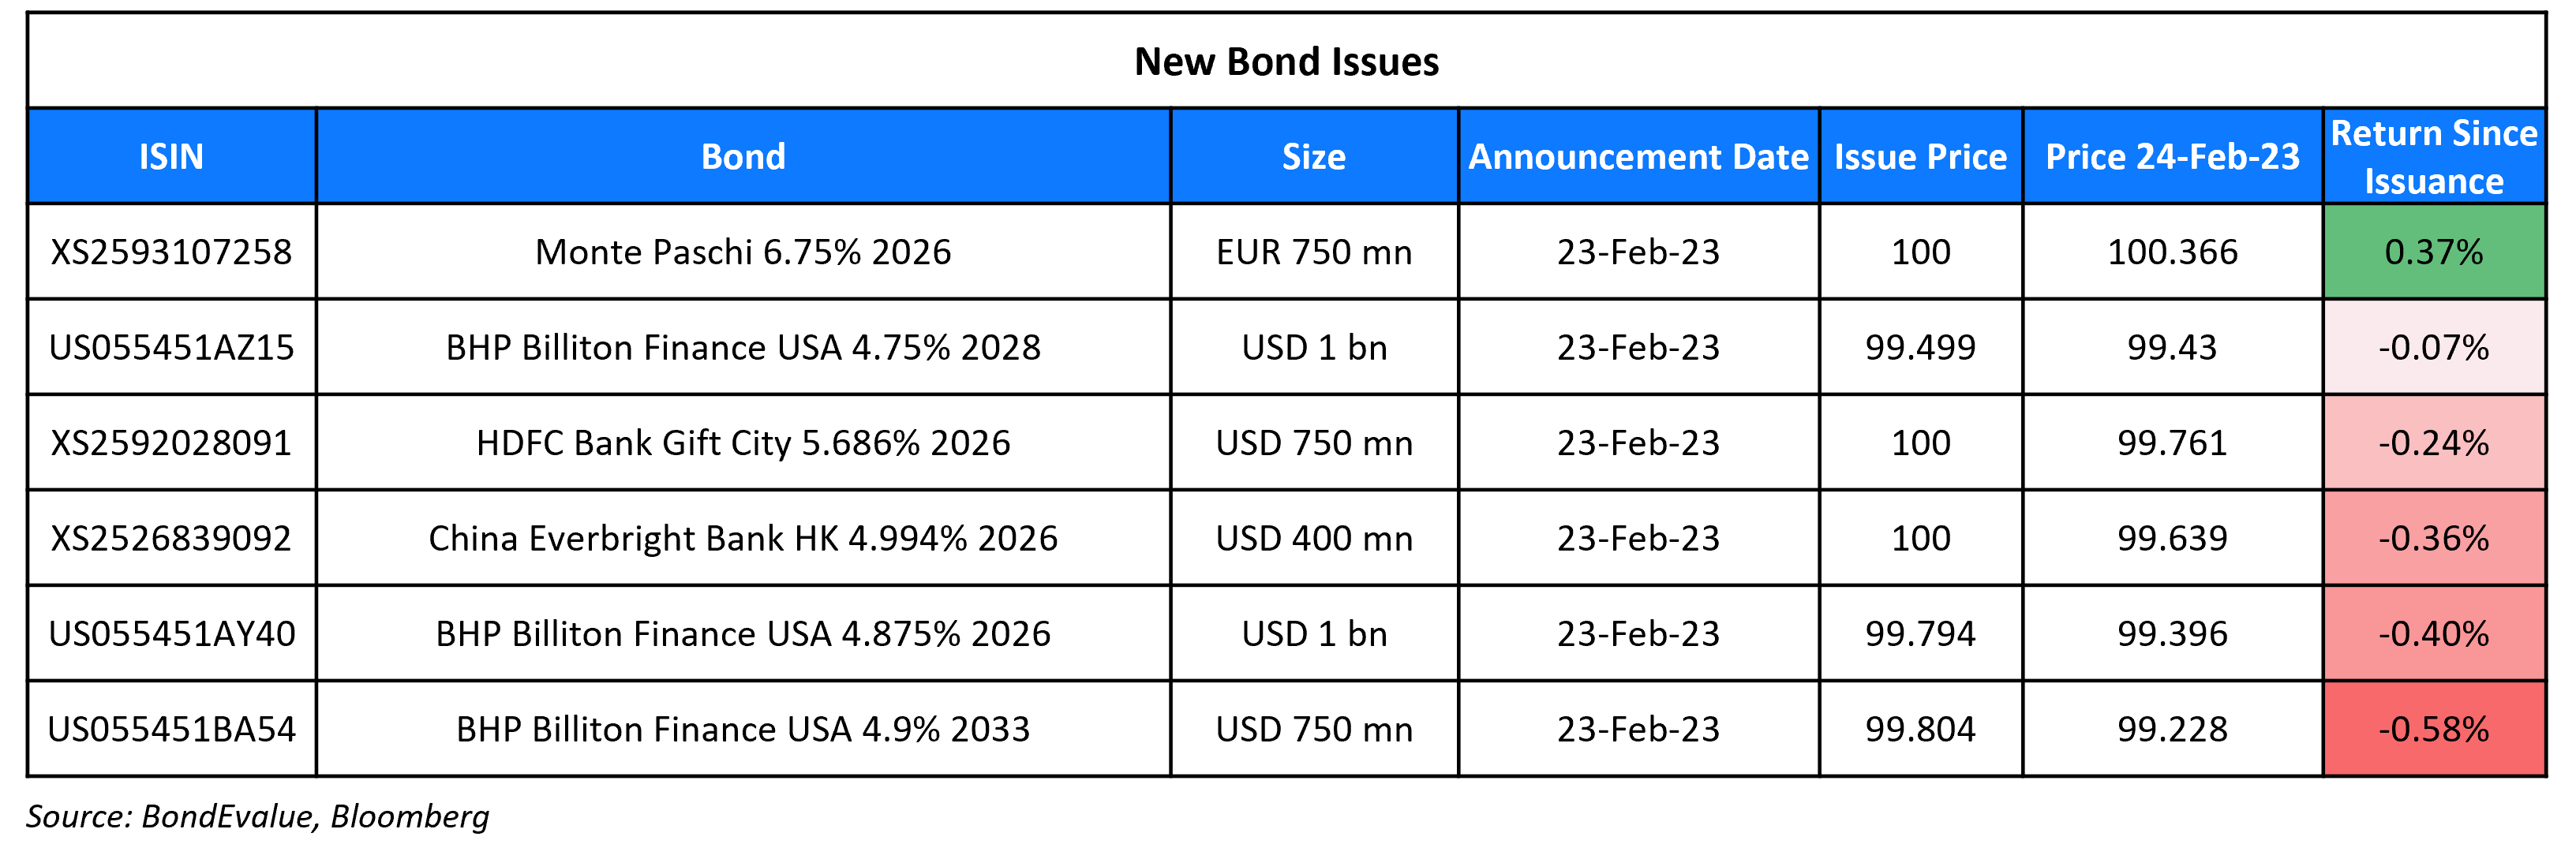 New Bond Issues 27 Feb 23